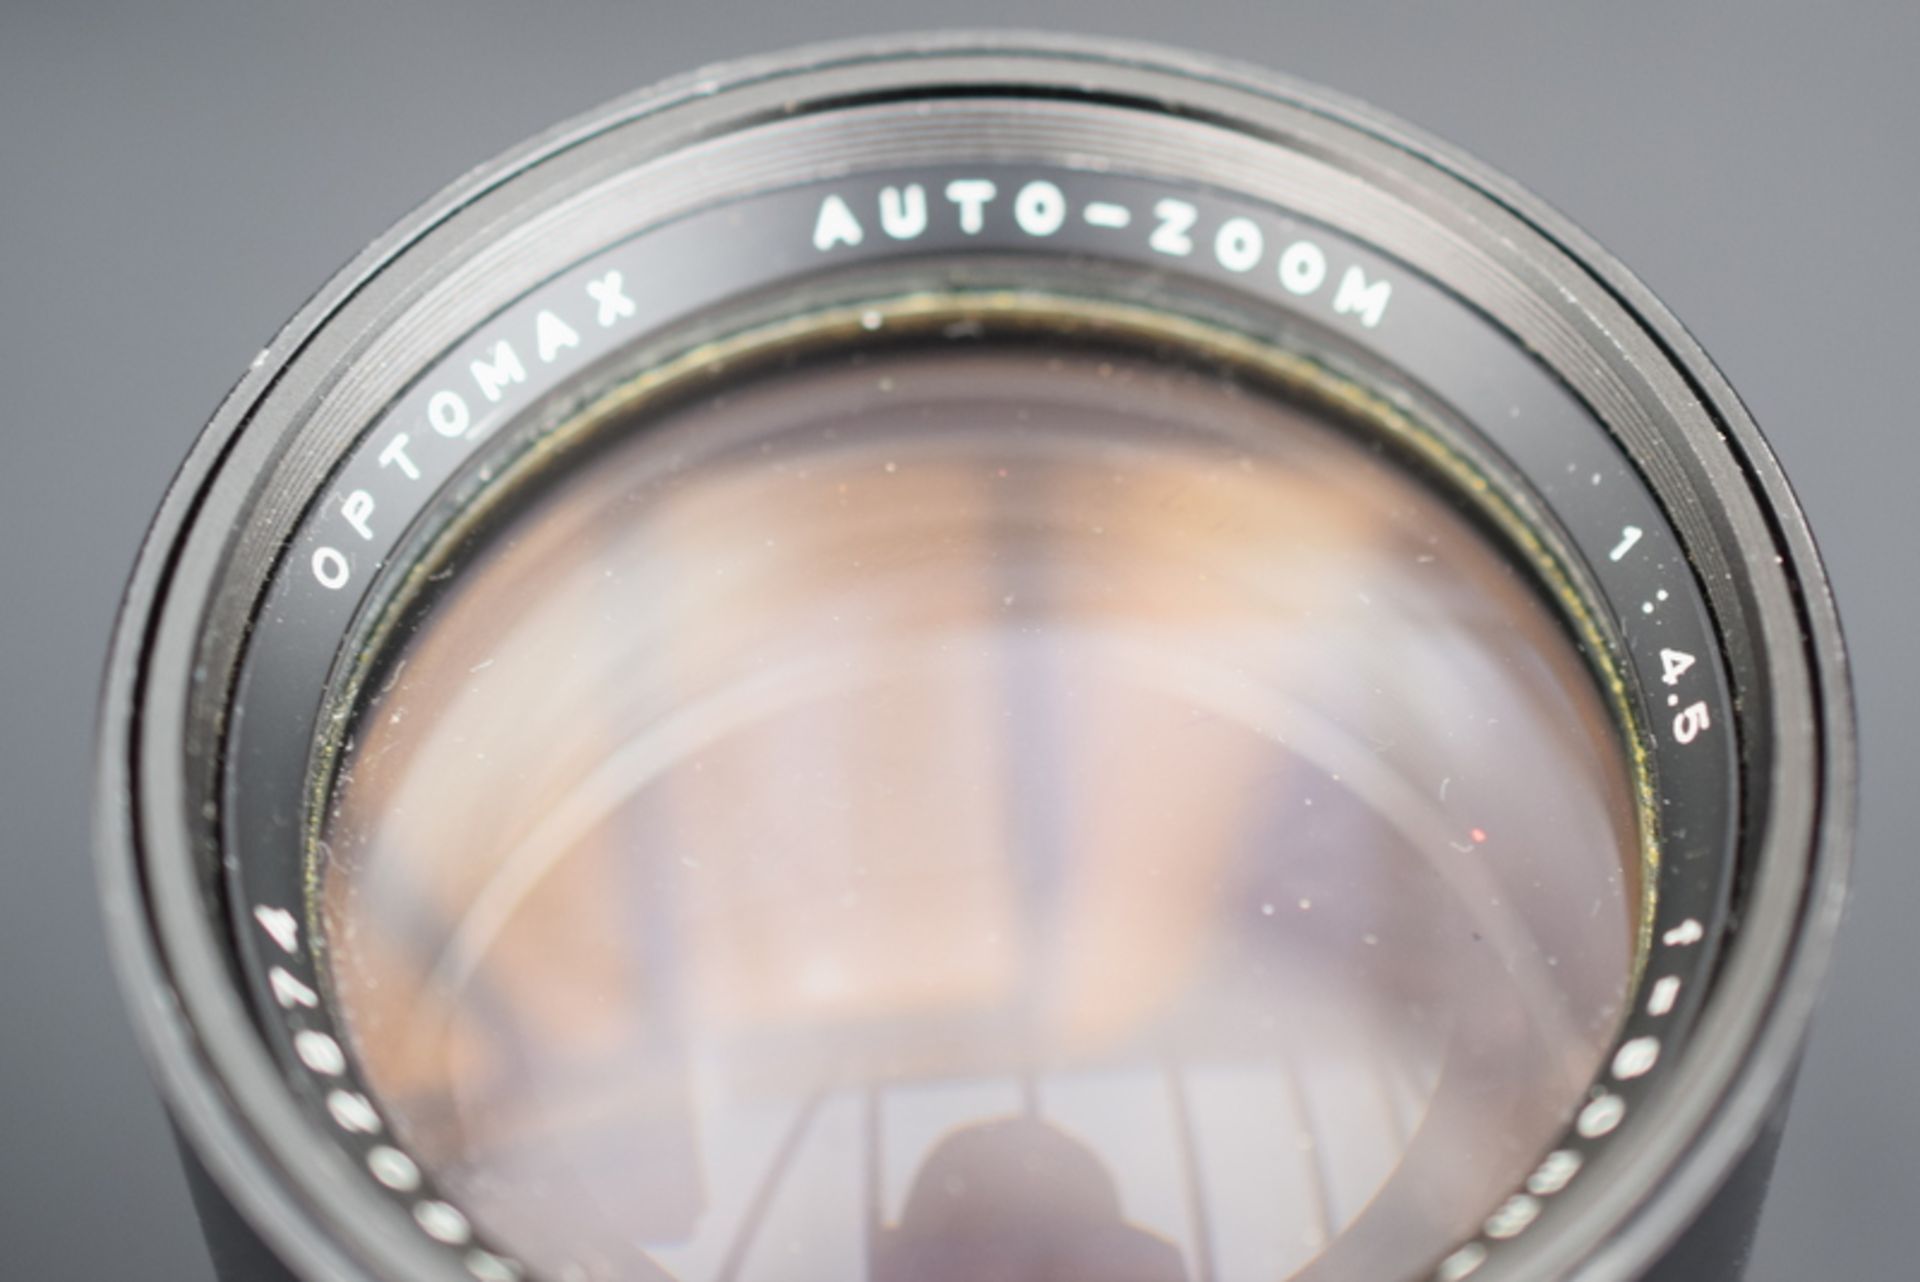 Optomax Telephoto 250mm Lens - Image 5 of 5